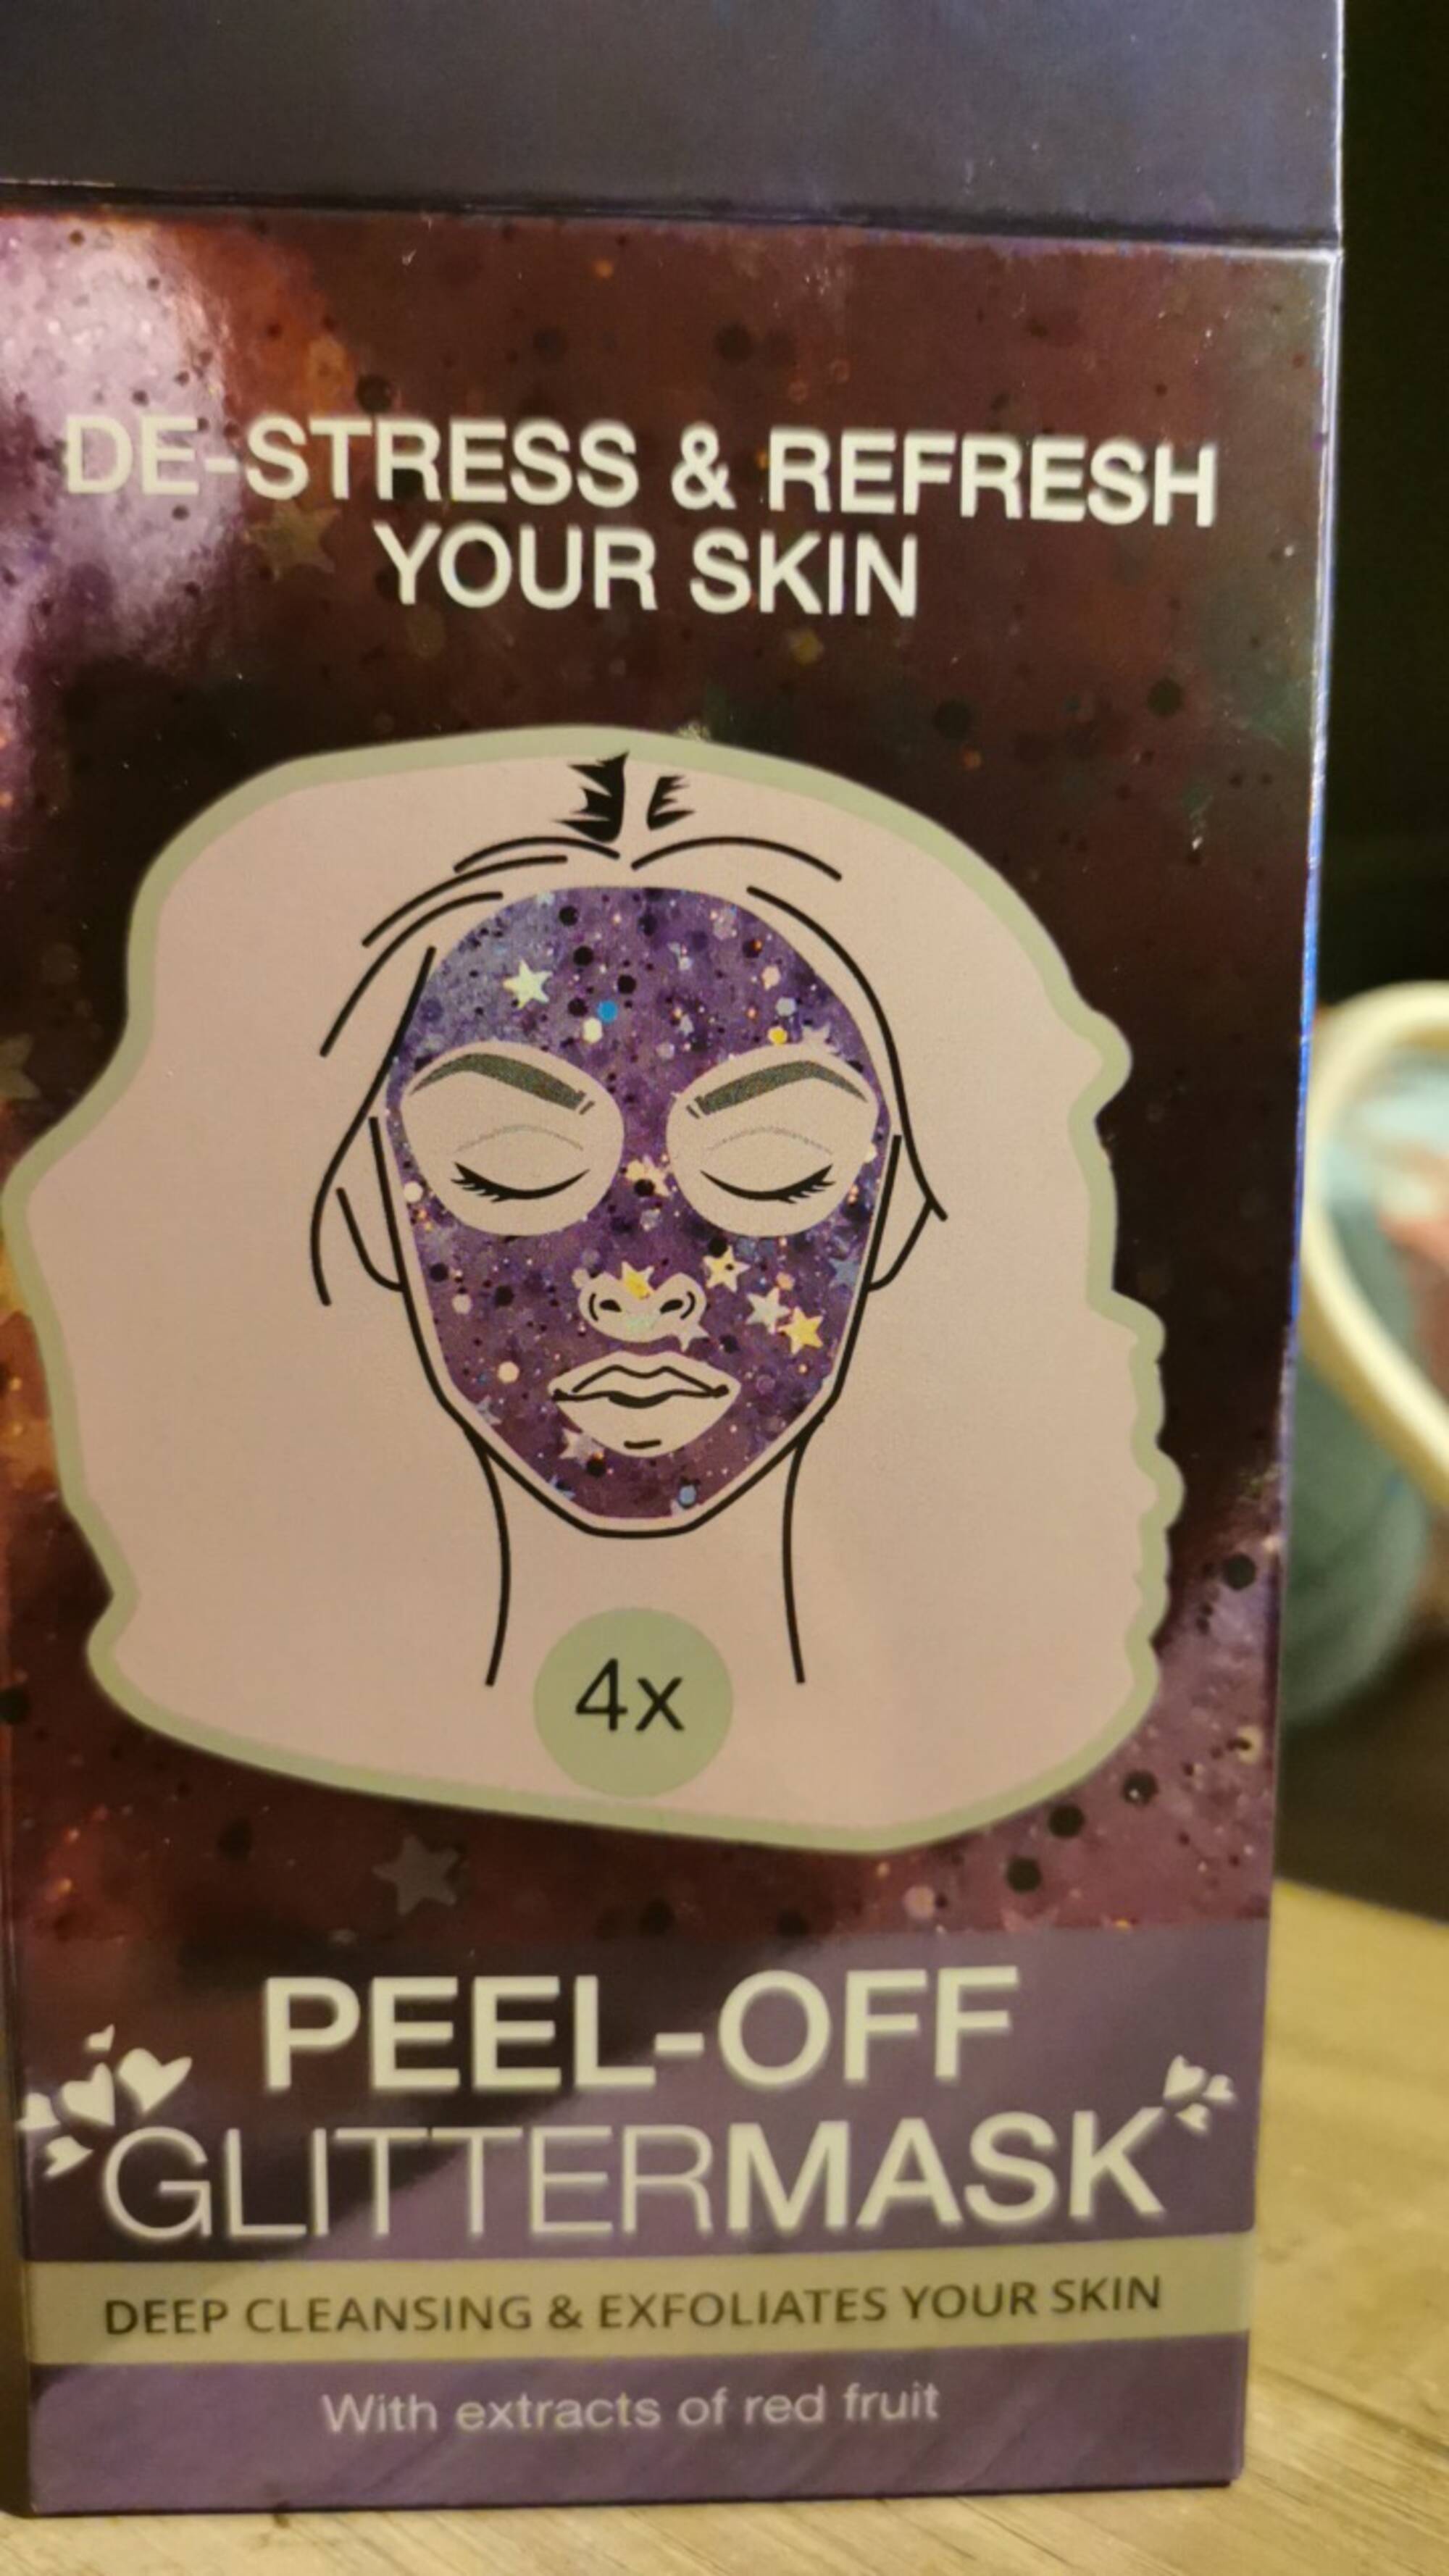 ACTION - De-stress & refresh your skin - Peel-of mask glittermask